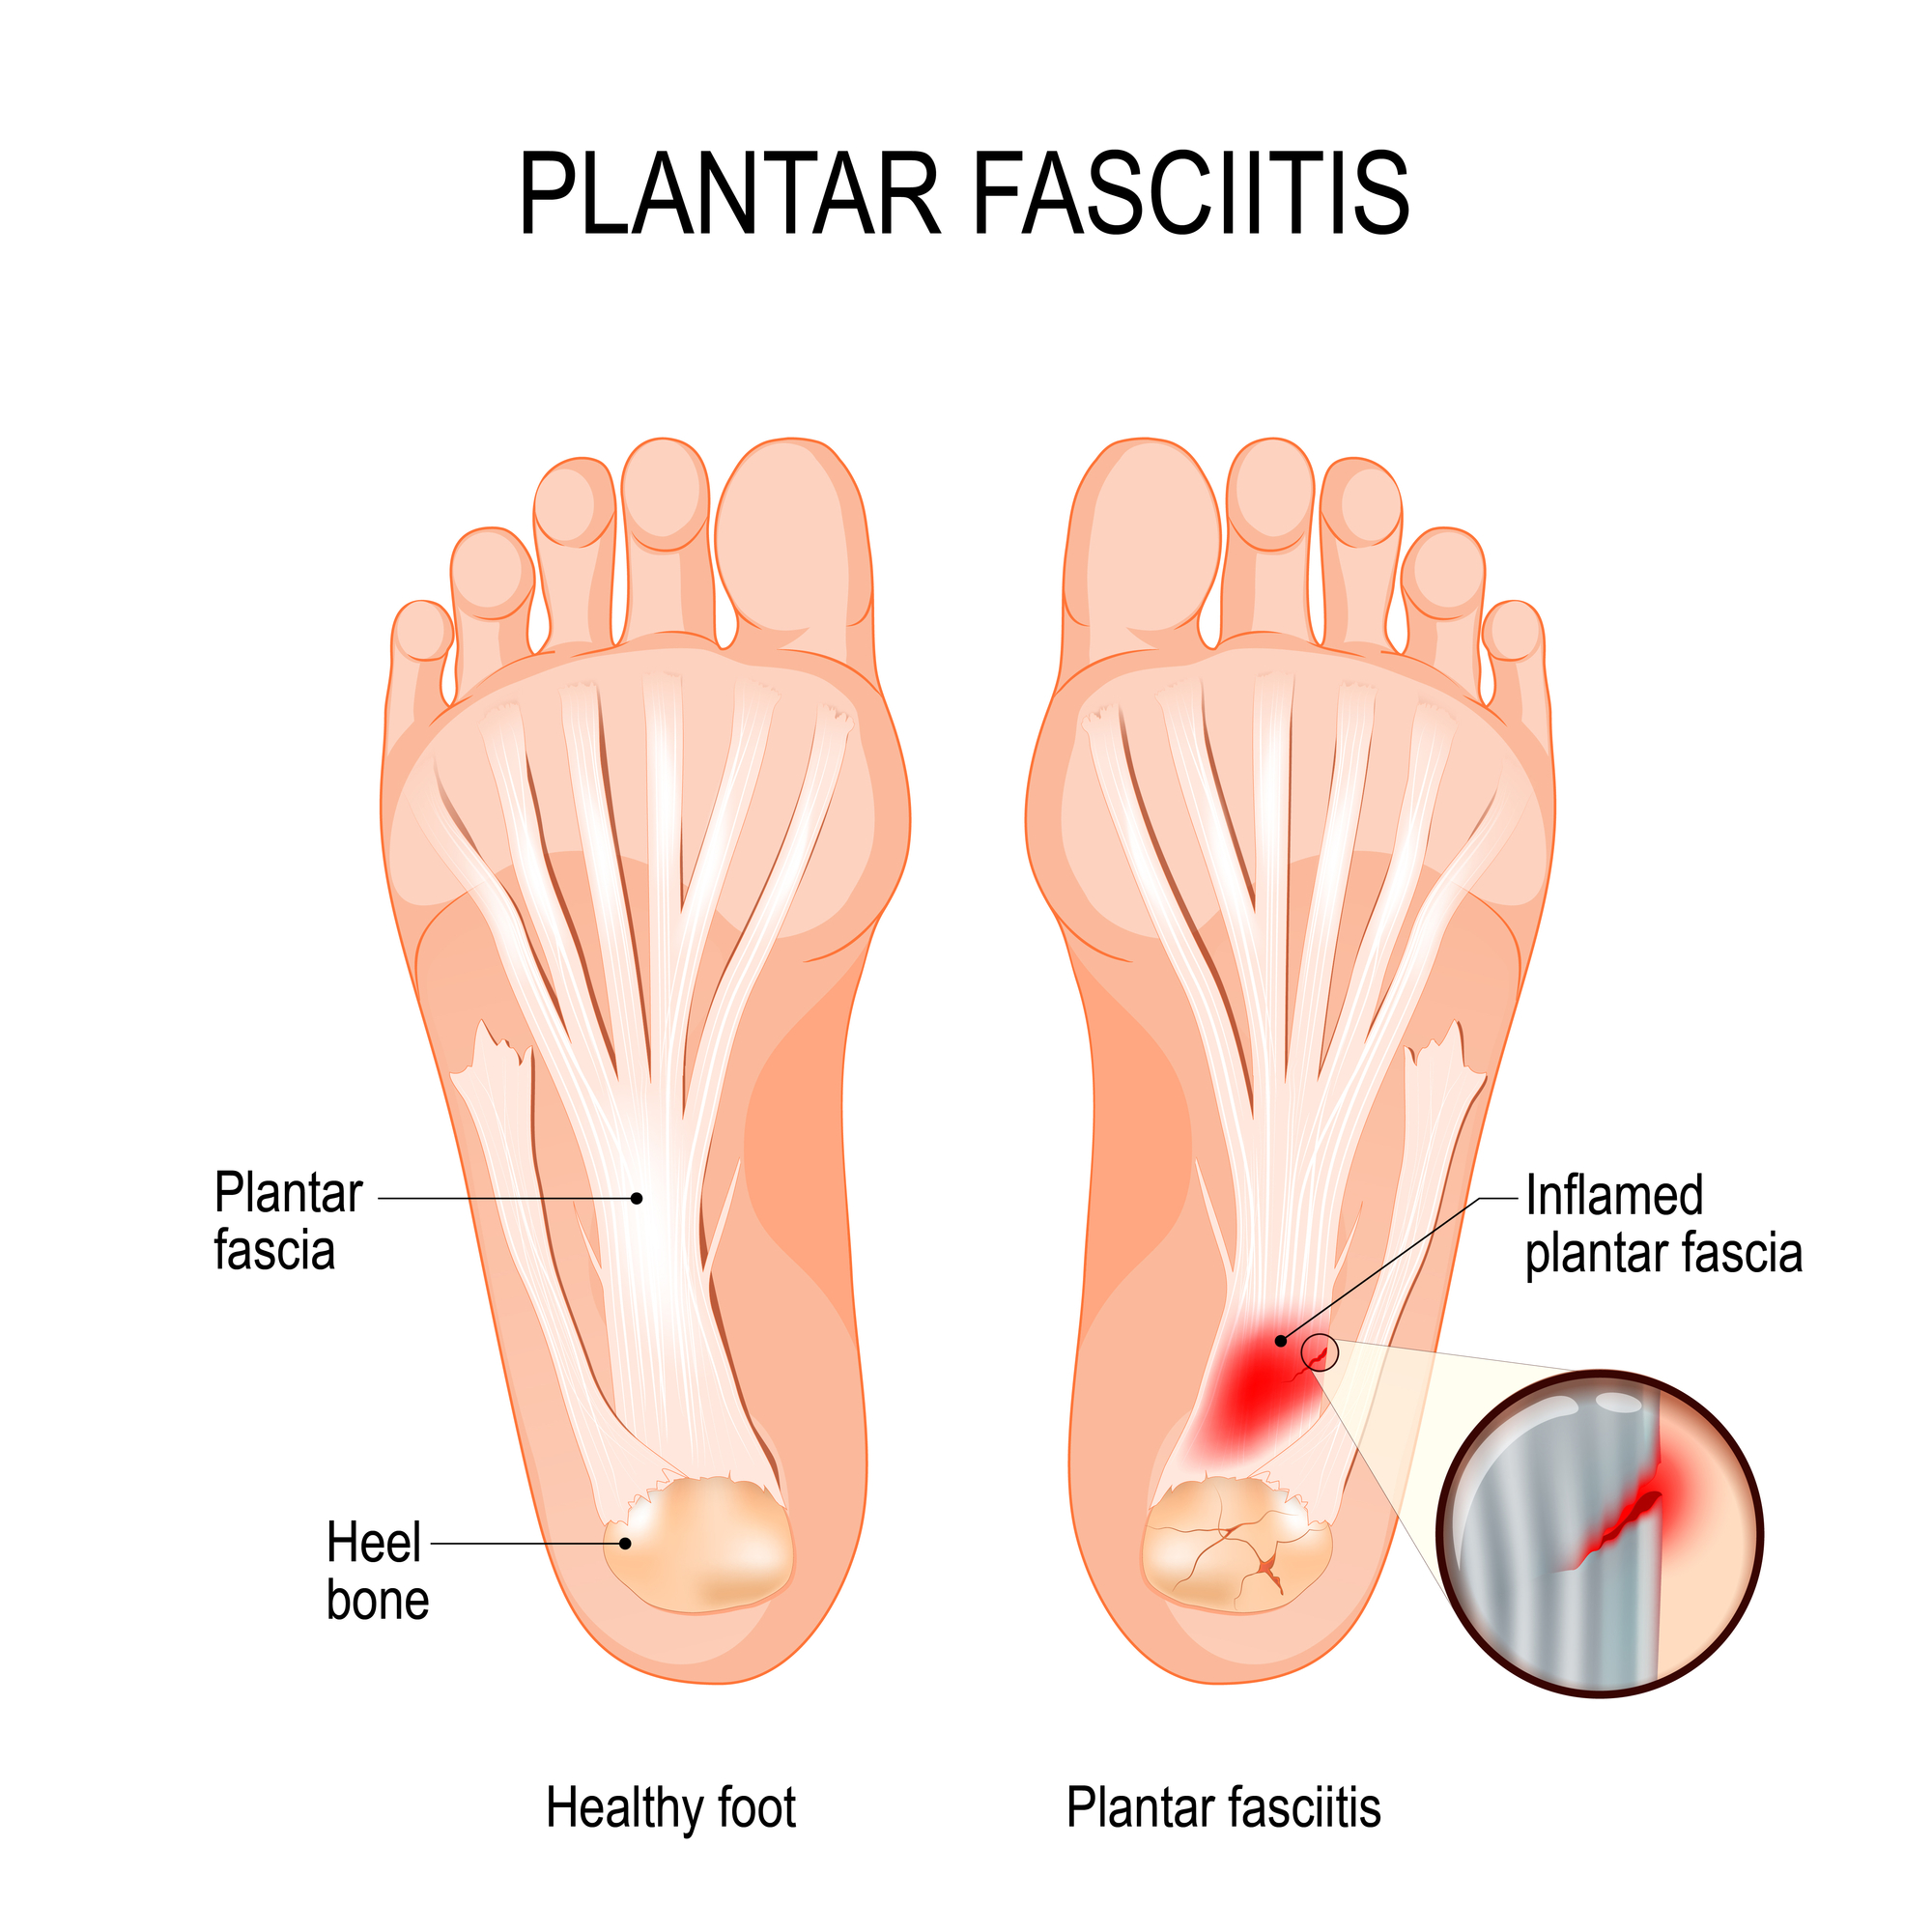 Plantar fasciitis: Symptoms, causes, and treatments - Harvard Health